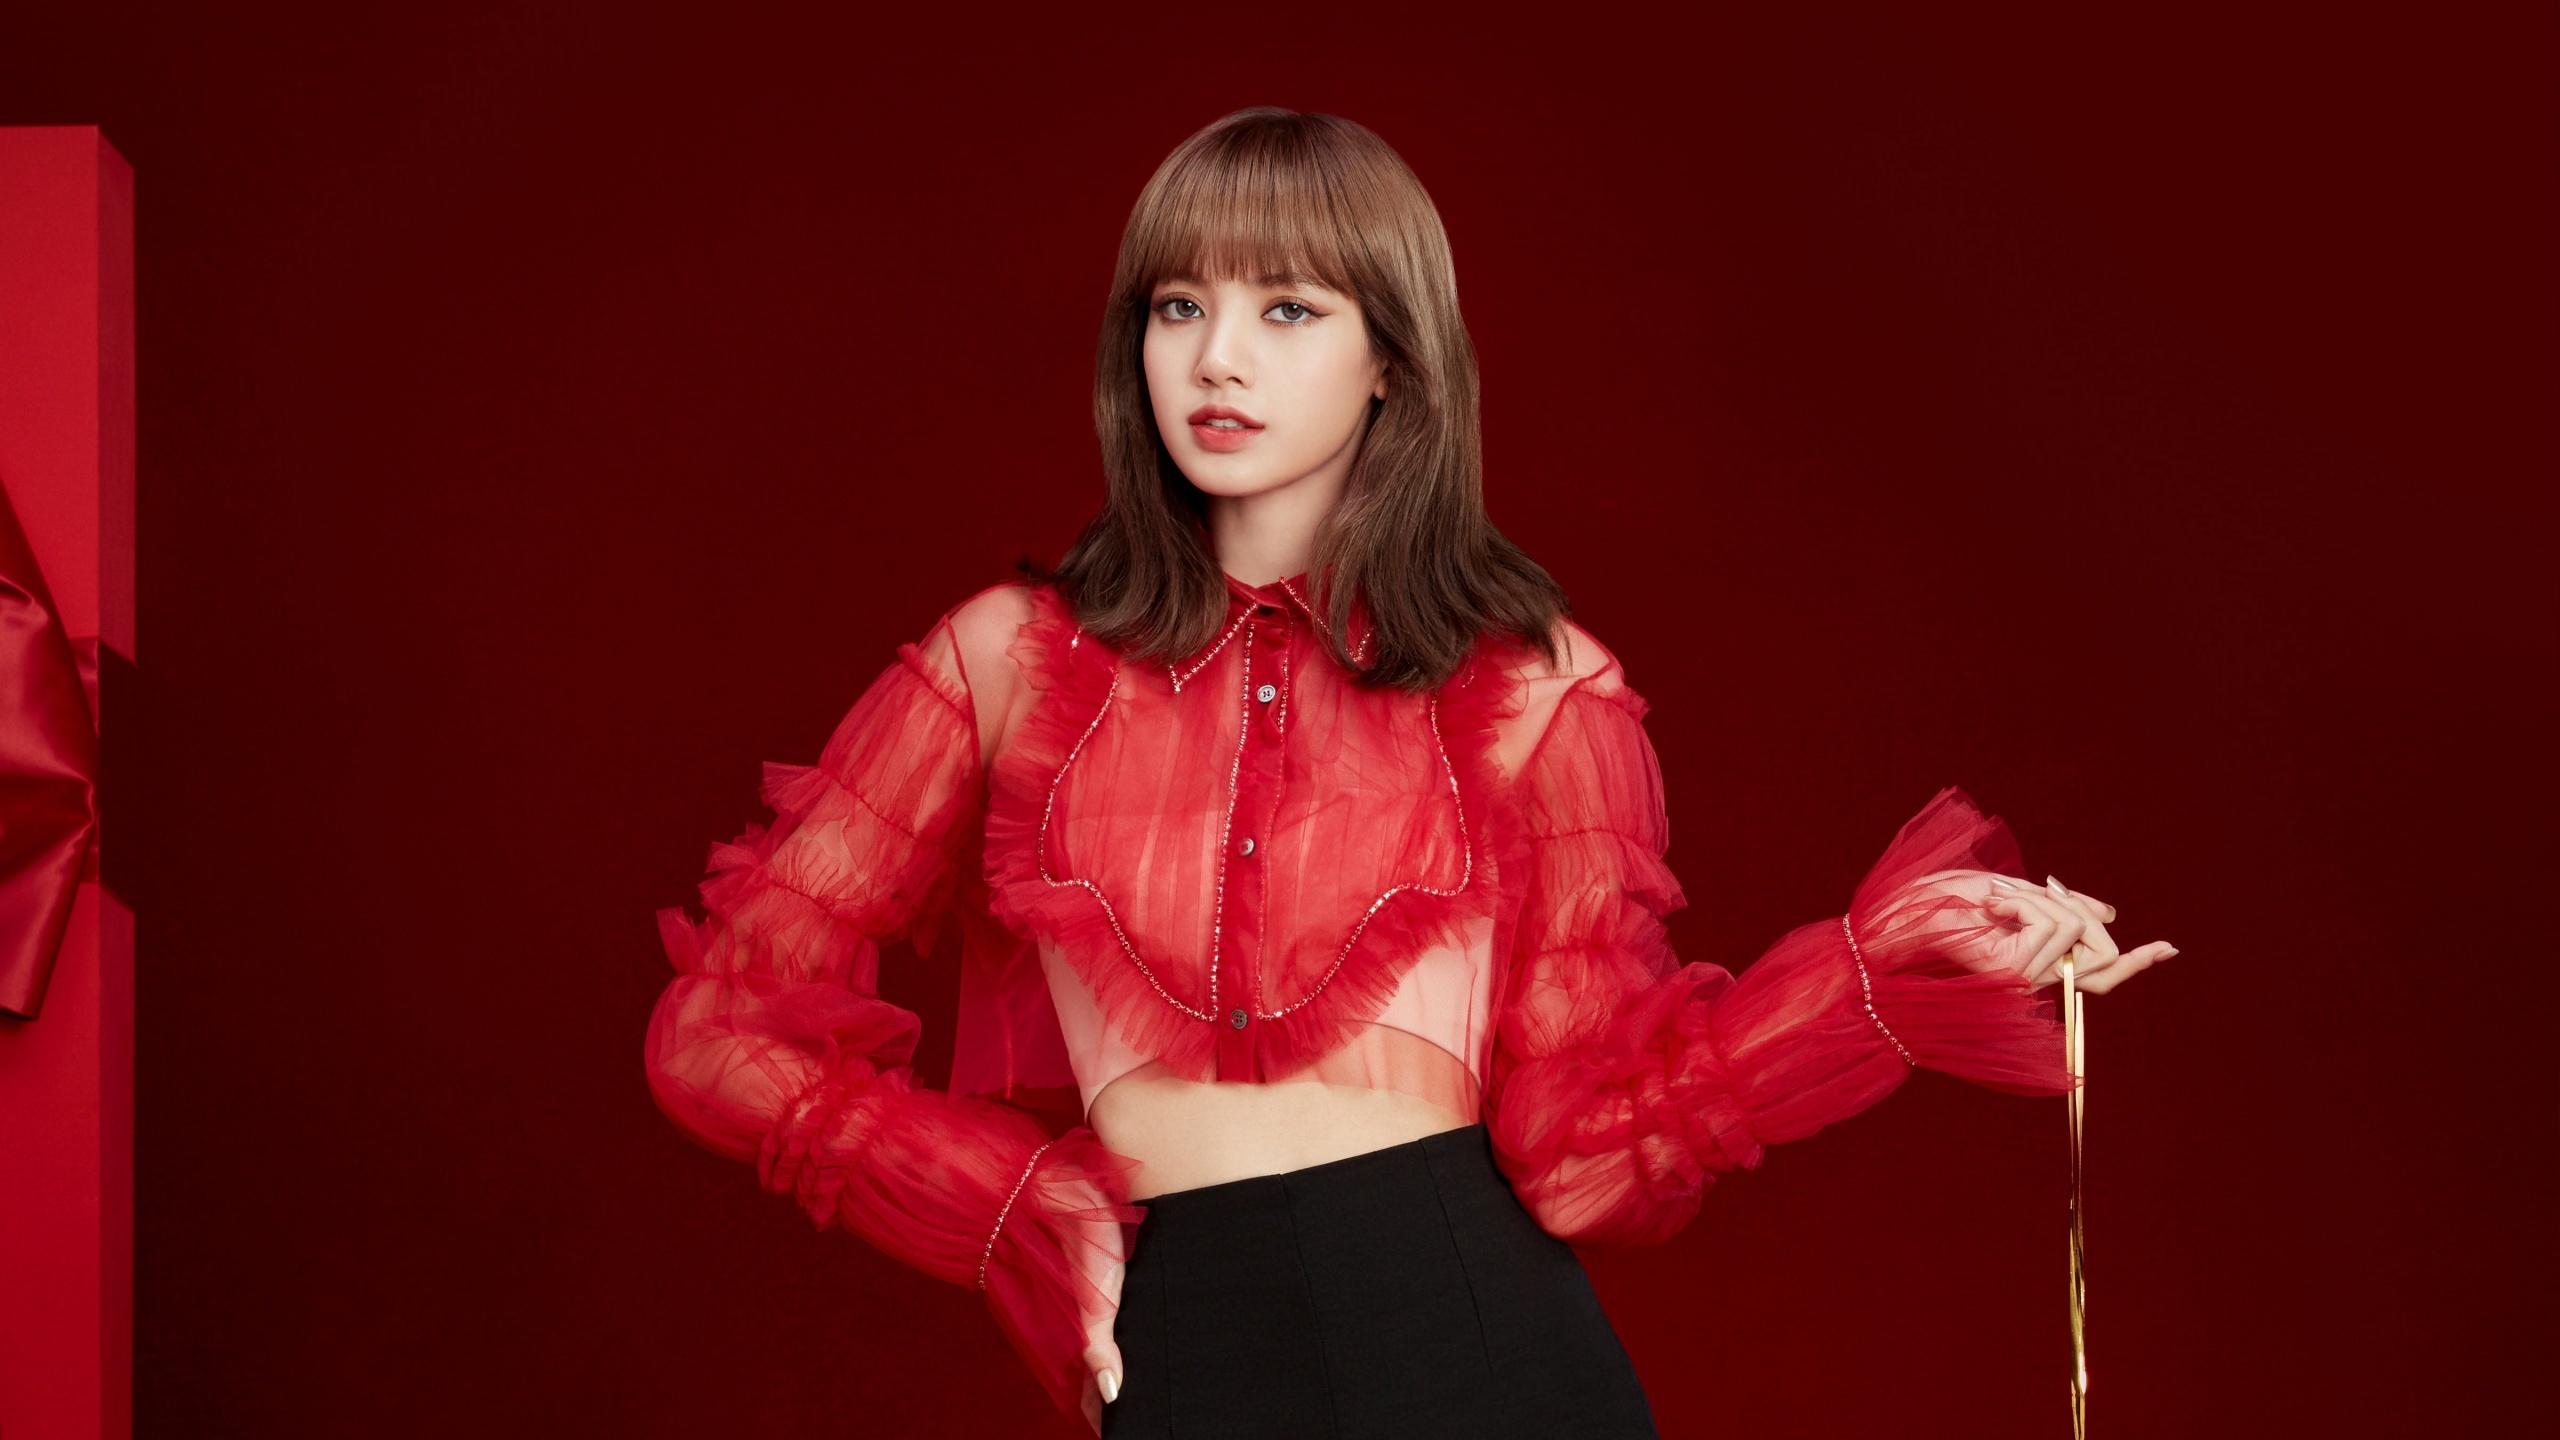 Lisa (Blackpink) music, 4k wallpaper, k-pop singer, red background, 2560x1440 HD Desktop